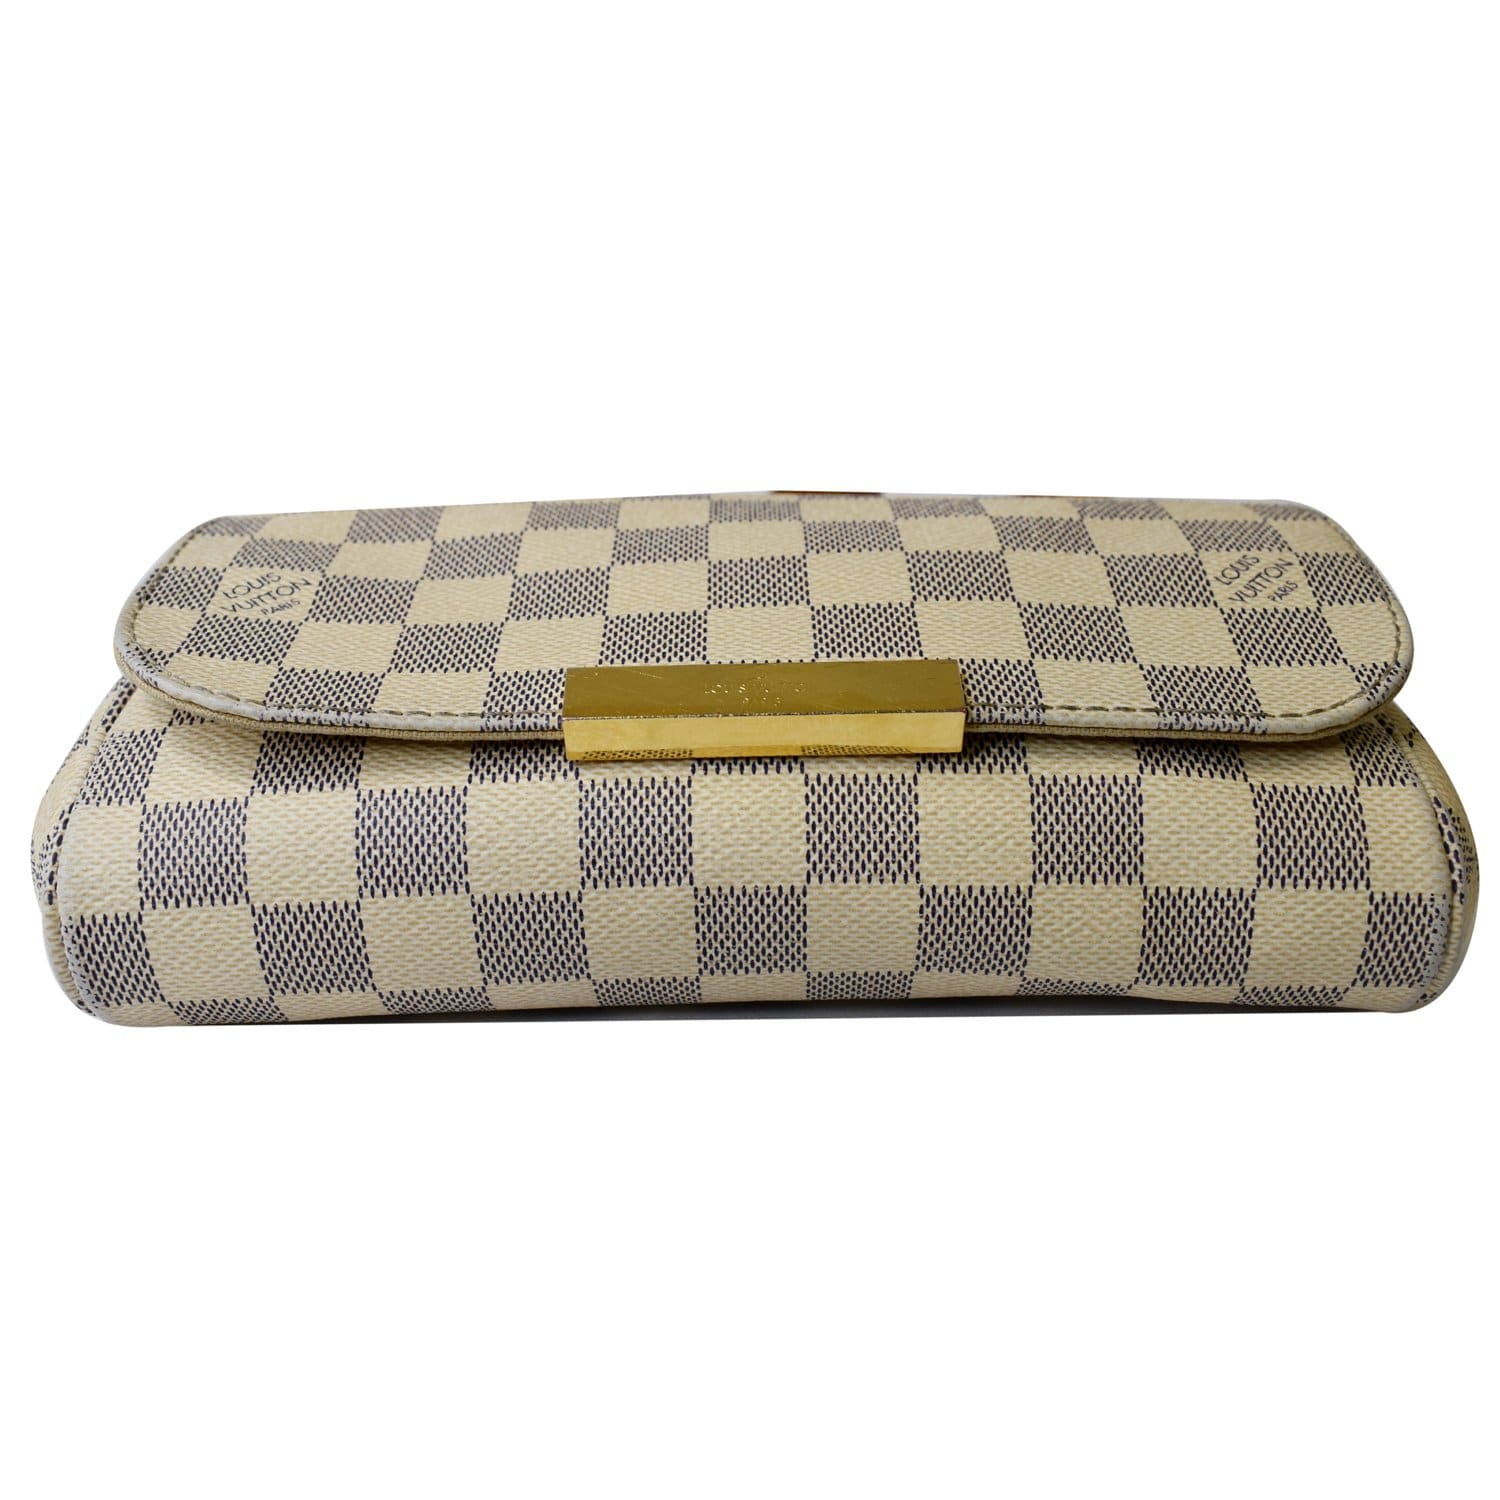 The Louis Vuitton lookalike handbag 👜  Louis vuitton, Vuitton, Louis  vuitton damier